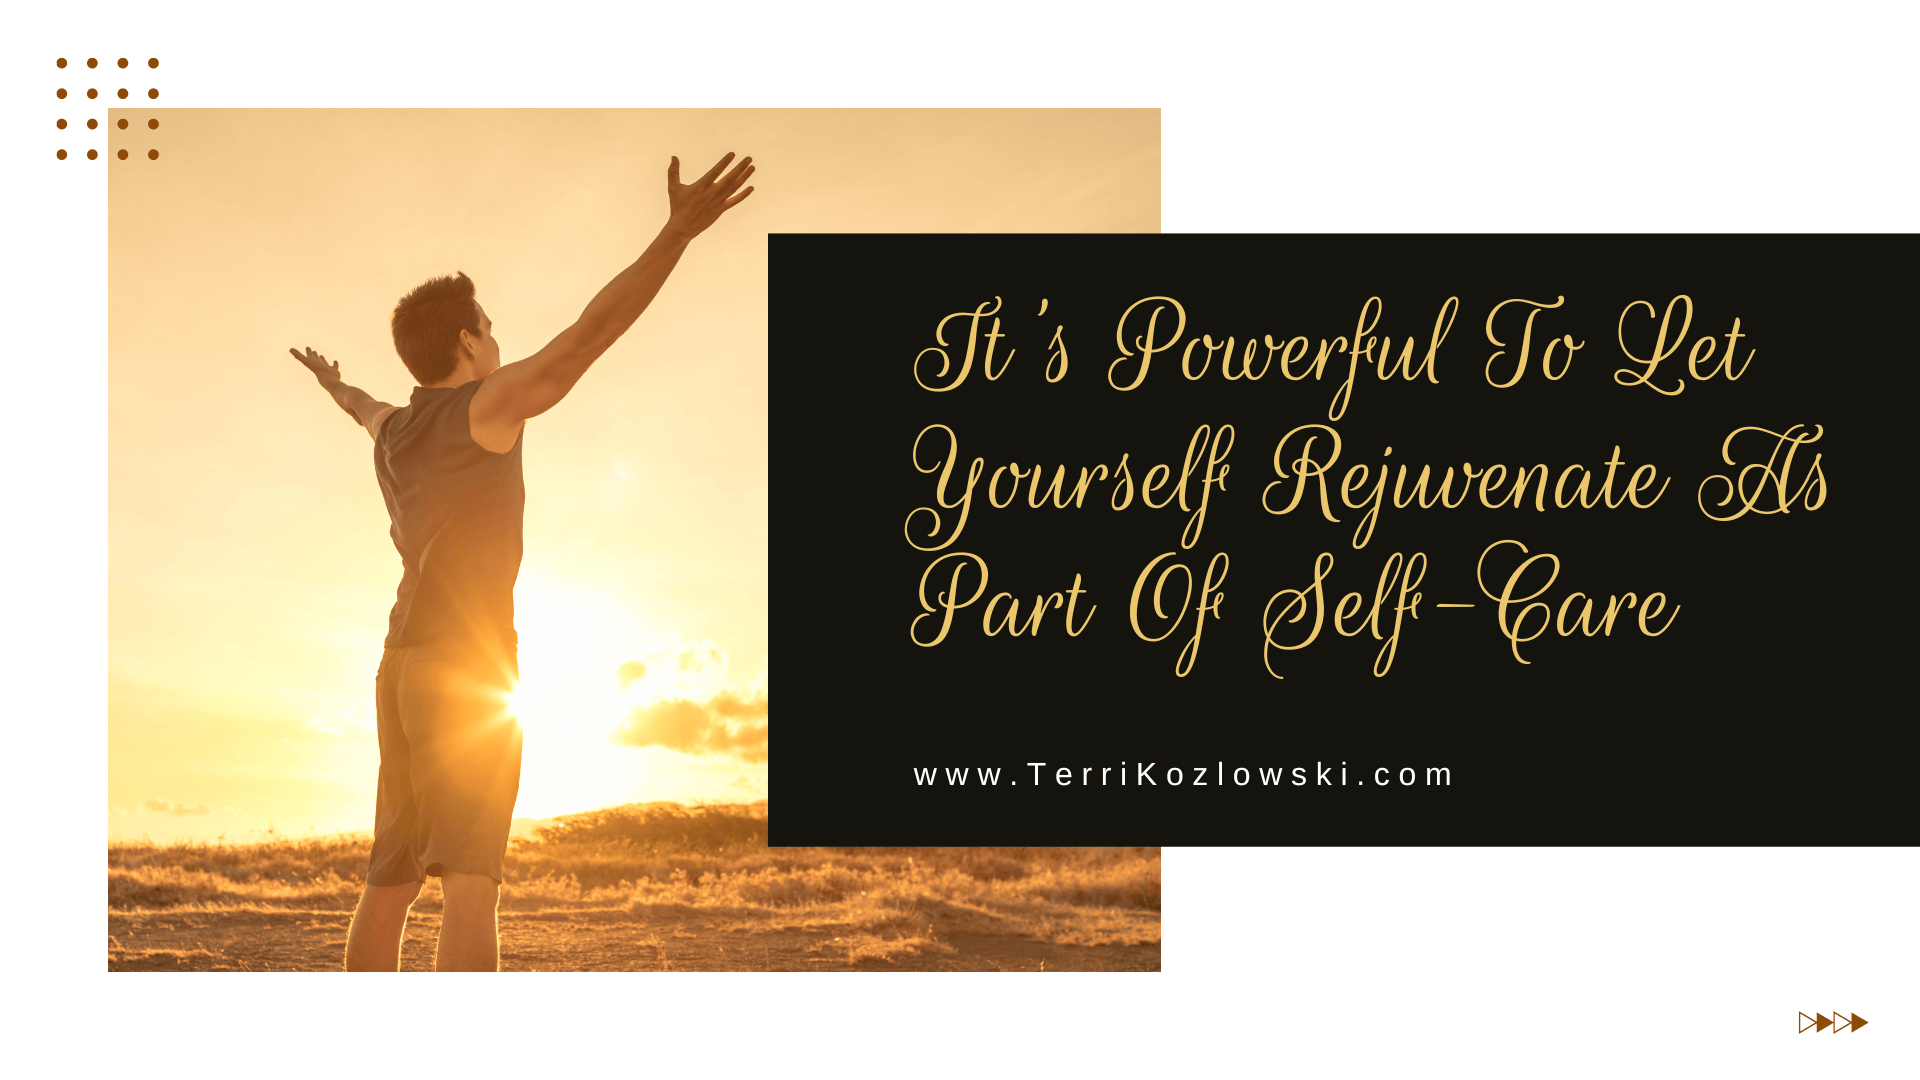 Rejuvenate Yourself